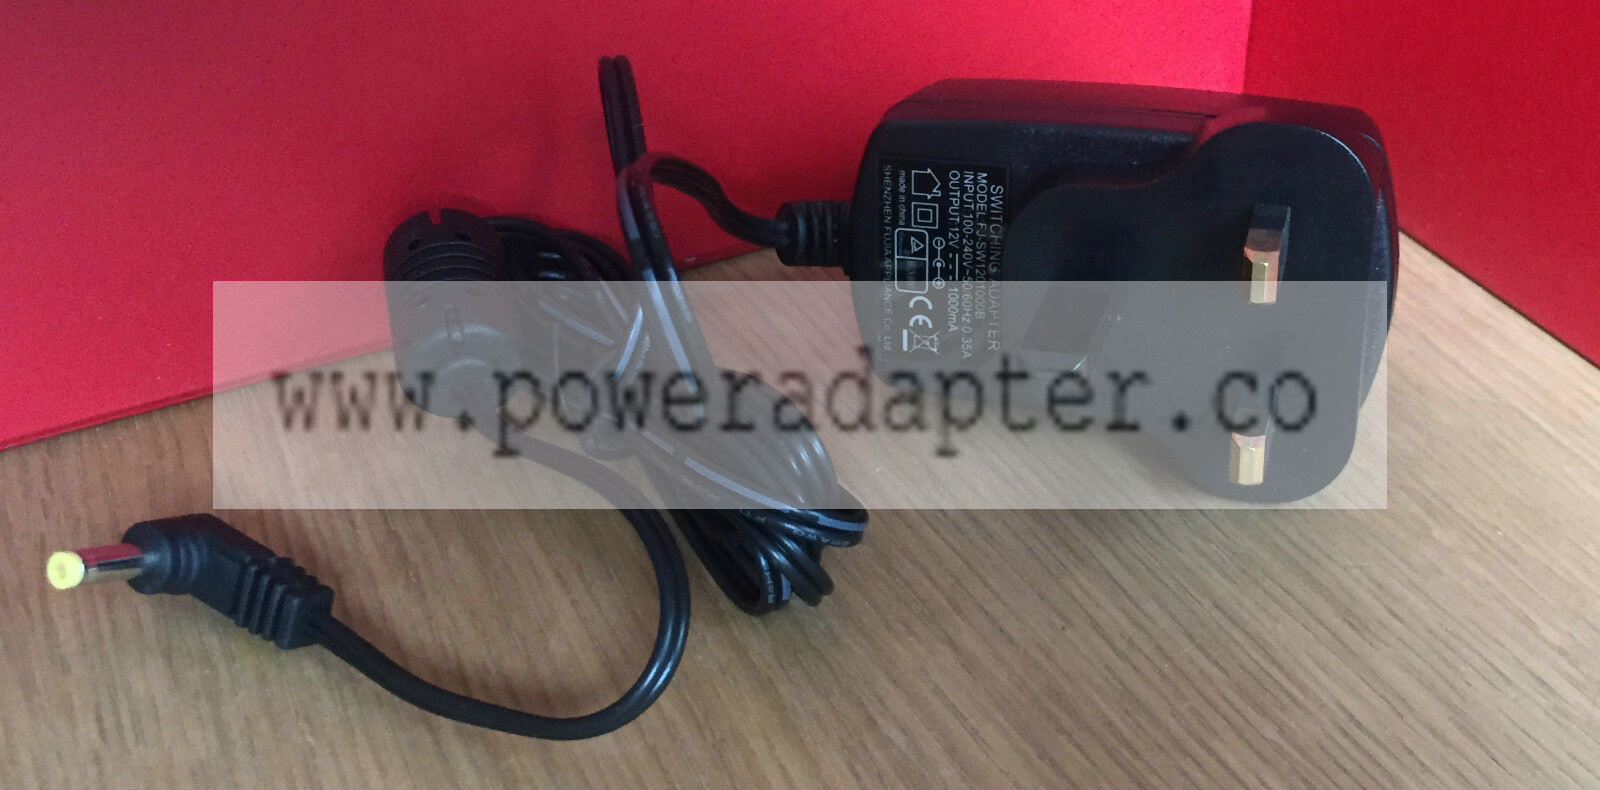 12 Volt 1Amp Power Supply Transformer Adapter PSU Universal Multi Purpose NEW Brand: Unbranded Type: AC/DC Adapter O